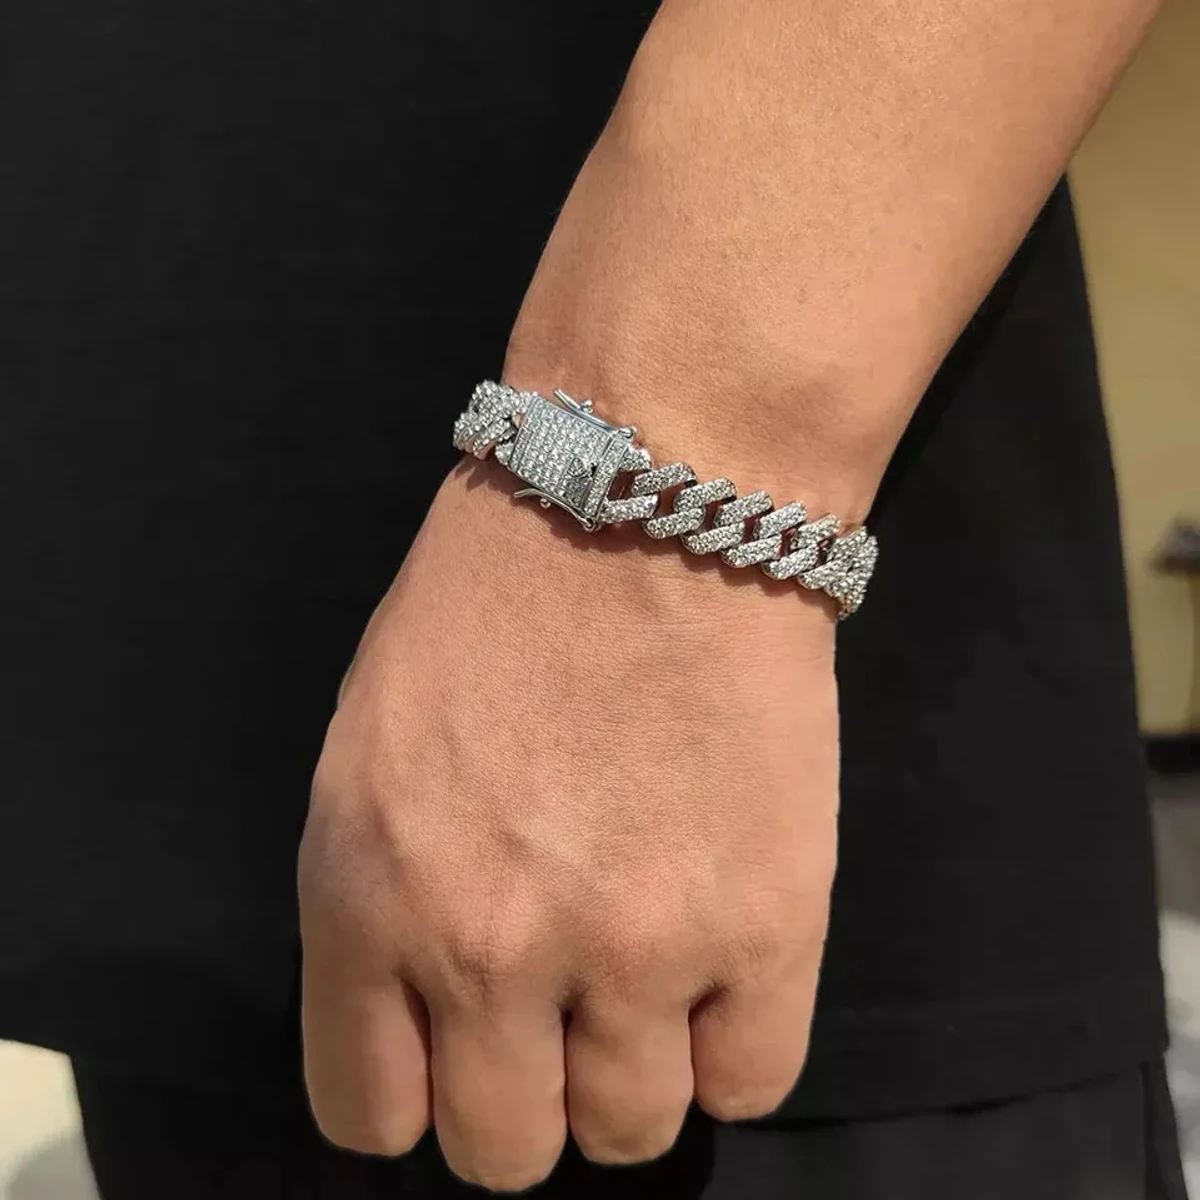 Stone Crystal Bracelet Set For Men - Bracelet For Men - Bracelet For Boy for Gifts